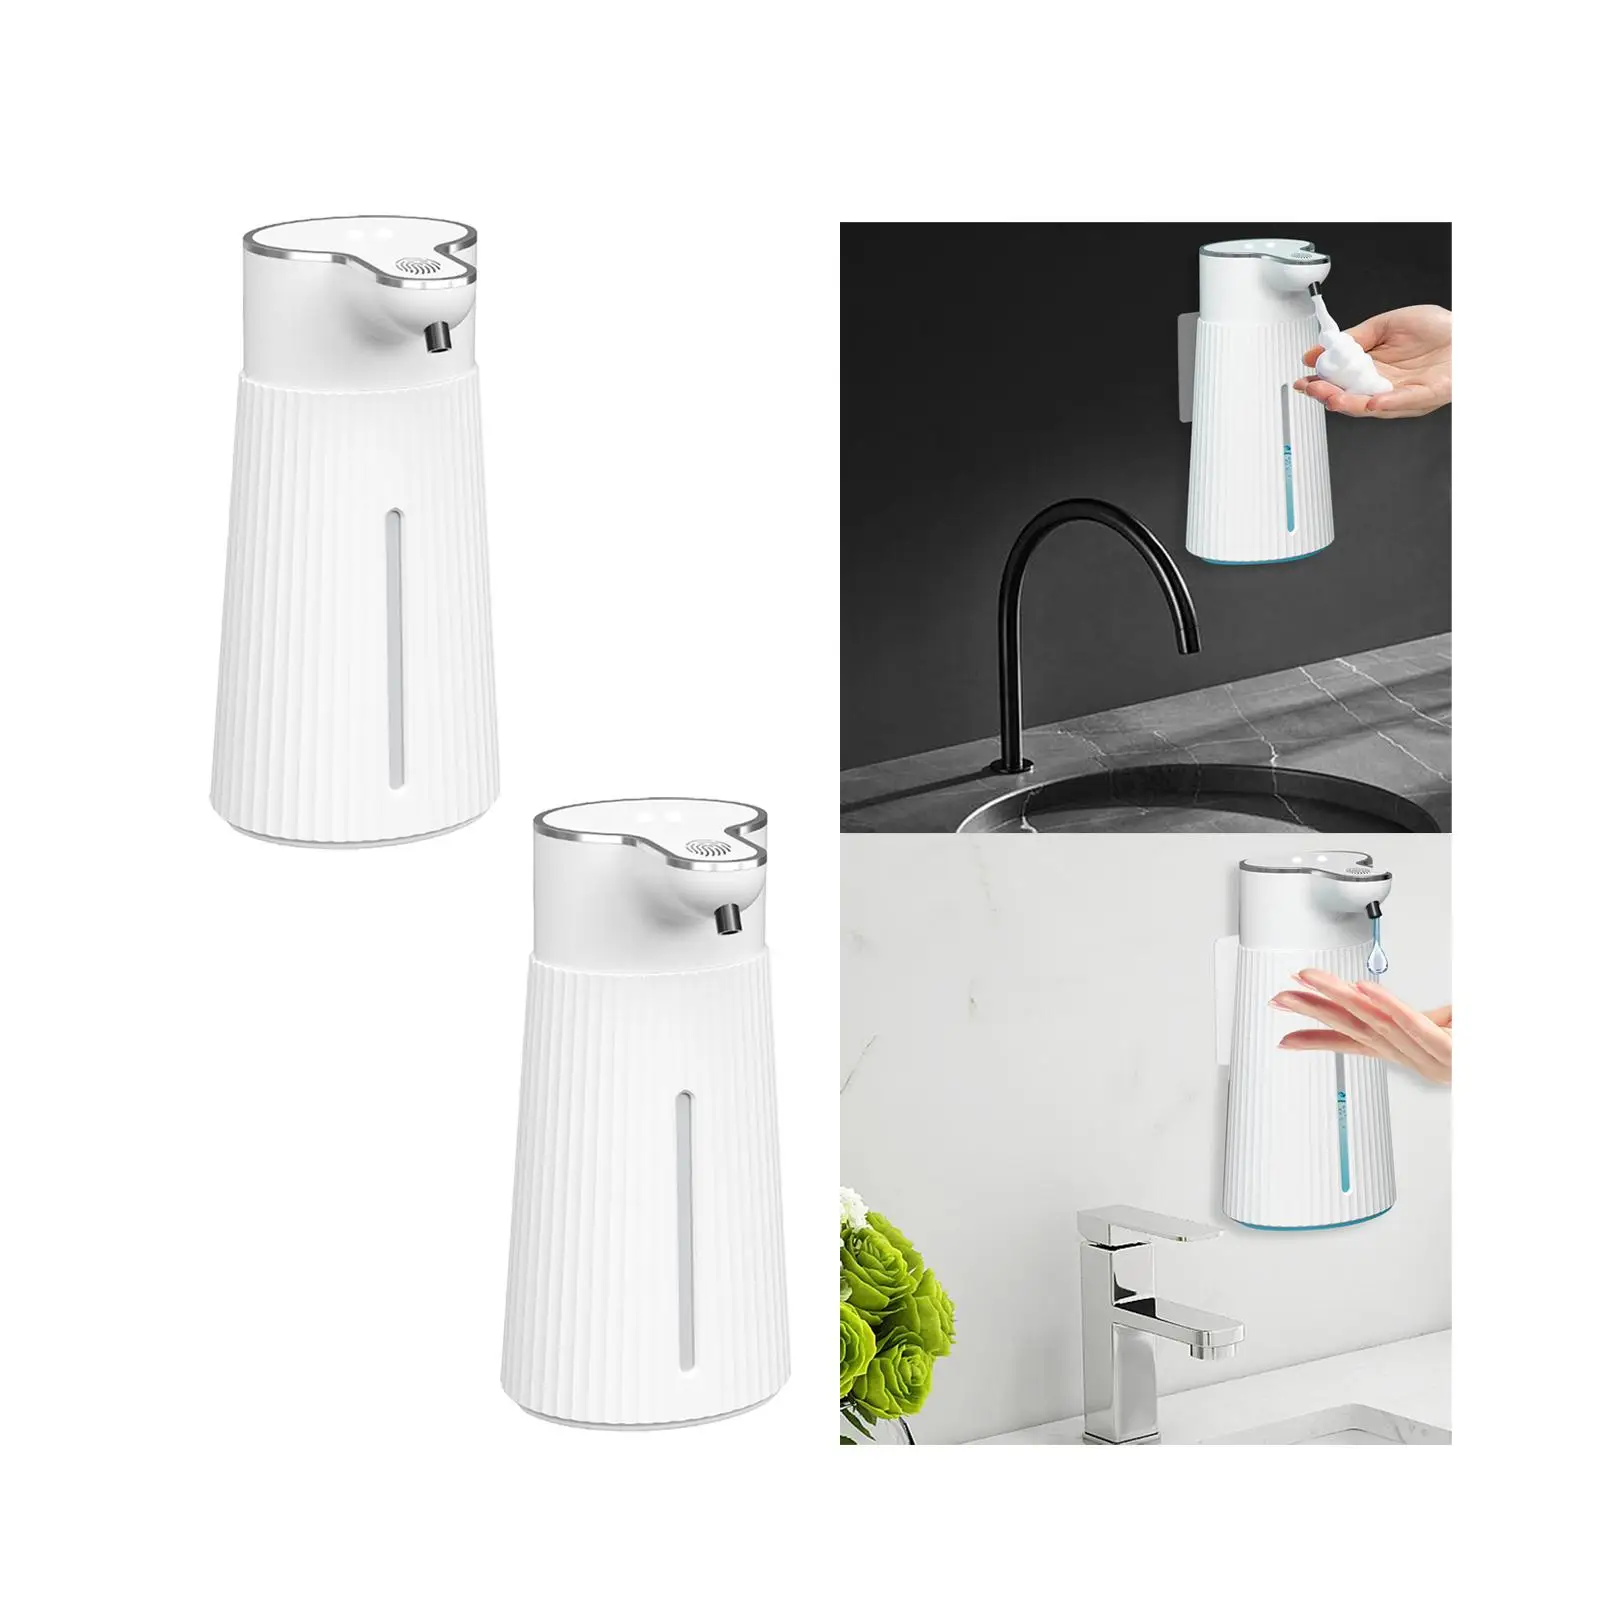 Automatic Soap Dispenser IPX6 Waterproof Countertop 13.5oz Hand Dispenser for Hotel Bathroom Commercial Washroom Restaurant